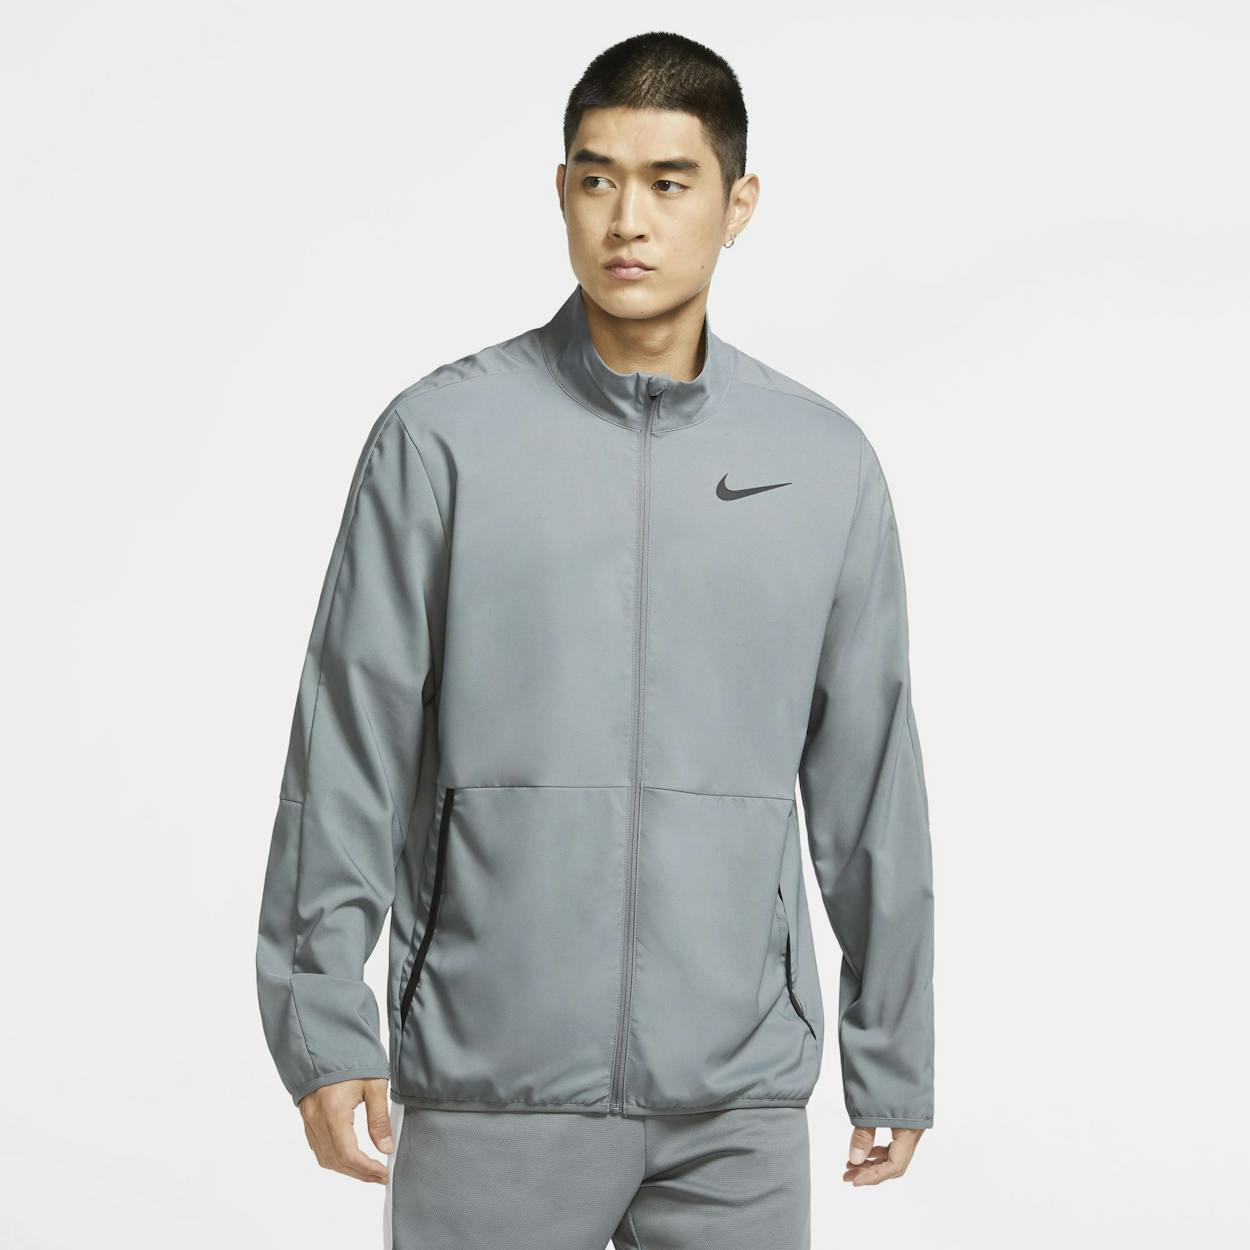 Nike Dri-FIT Jacket Men | 21RUN